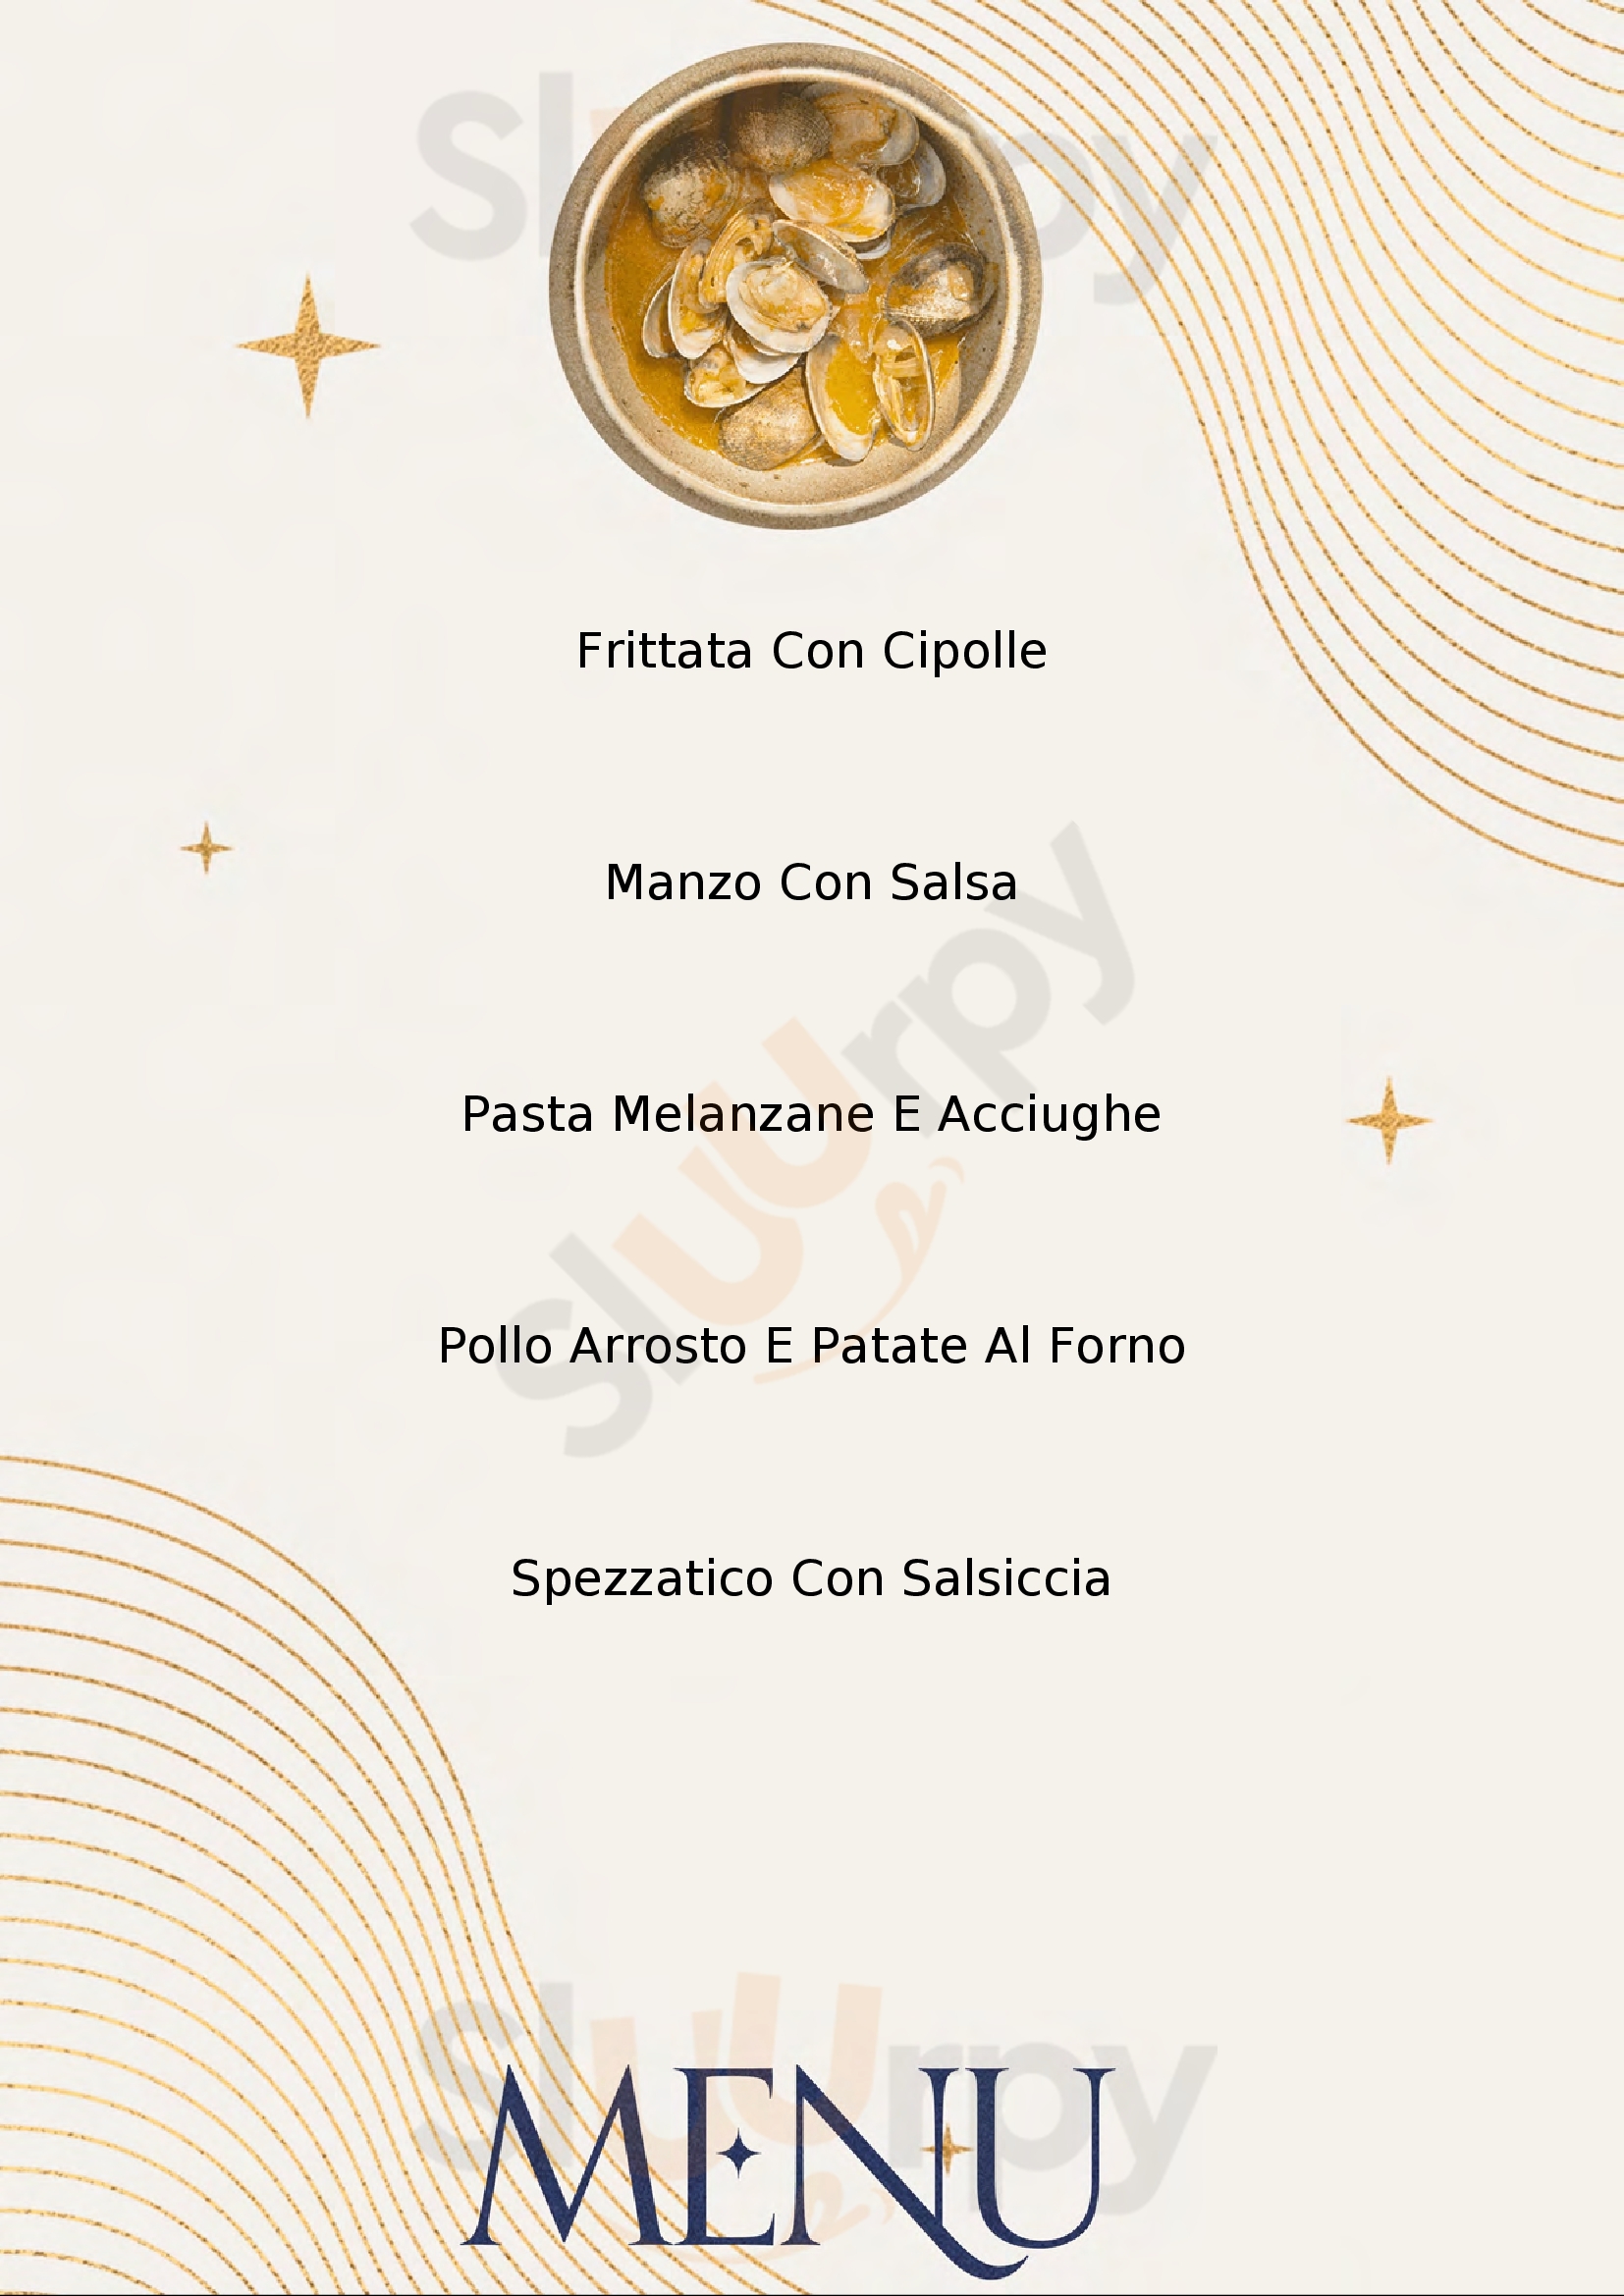 Fennec Bar & Tavola calda Castelleone menù 1 pagina